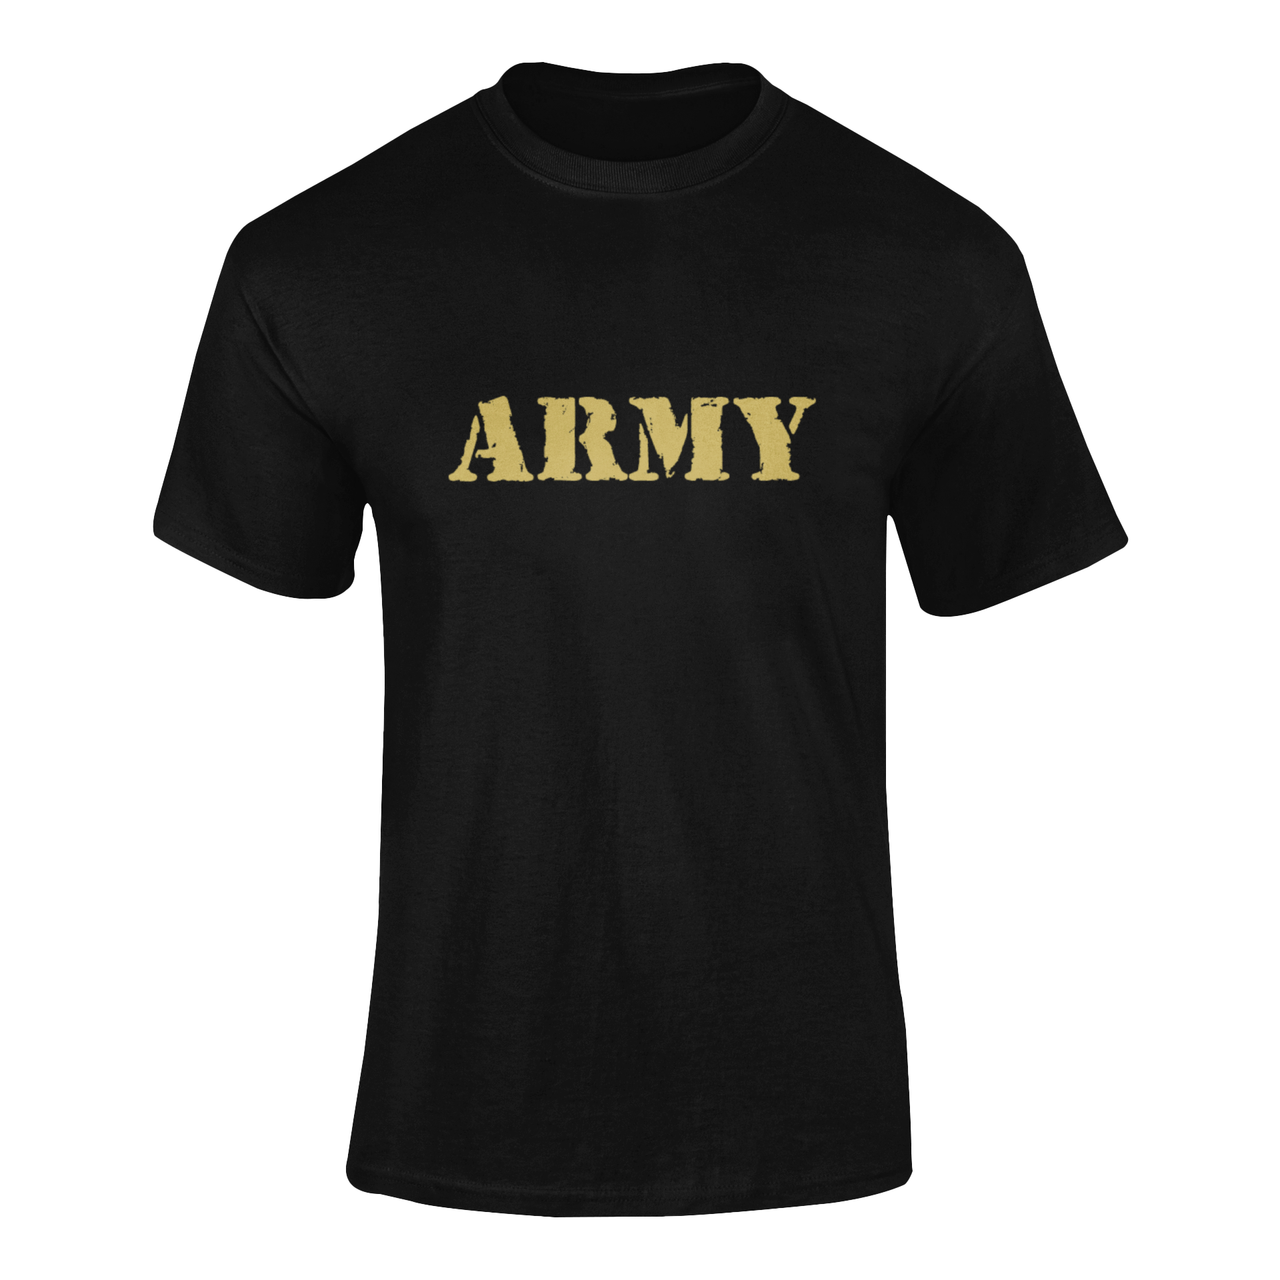 Army T-shirt - Army (Men)